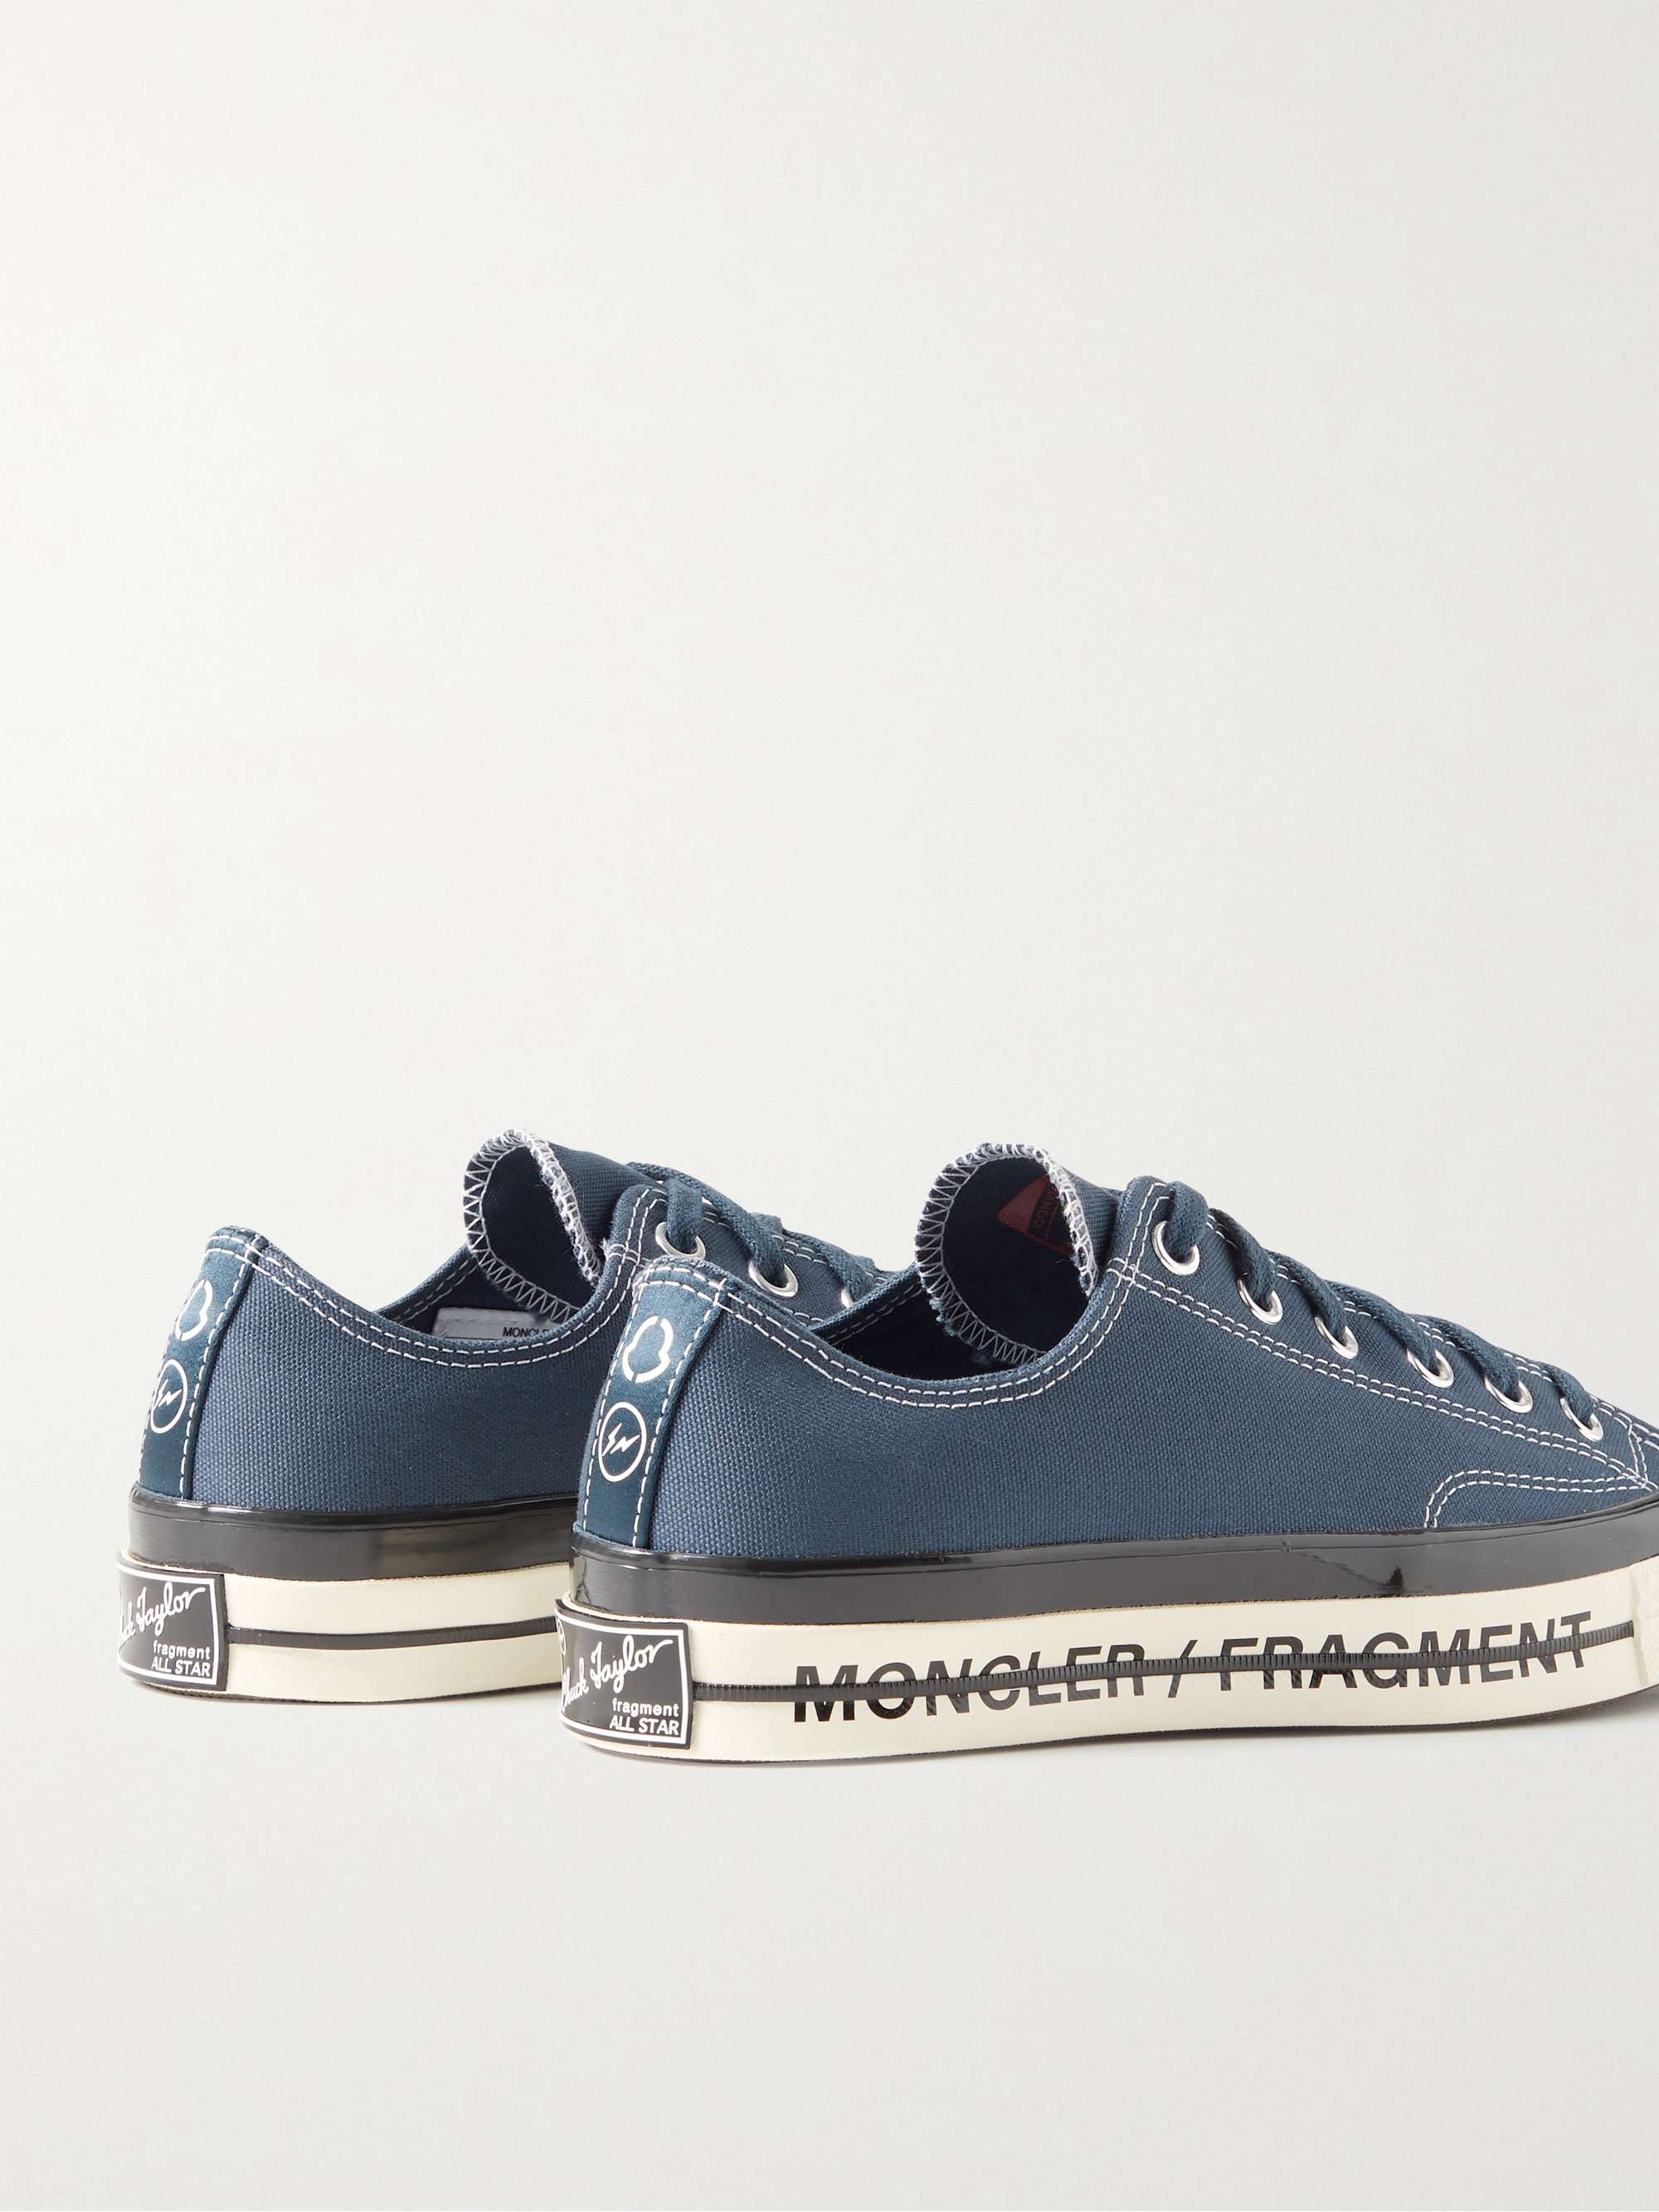 MONCLER + Converse 7 Moncler Fragment Fraylor III Canvas Sneakers